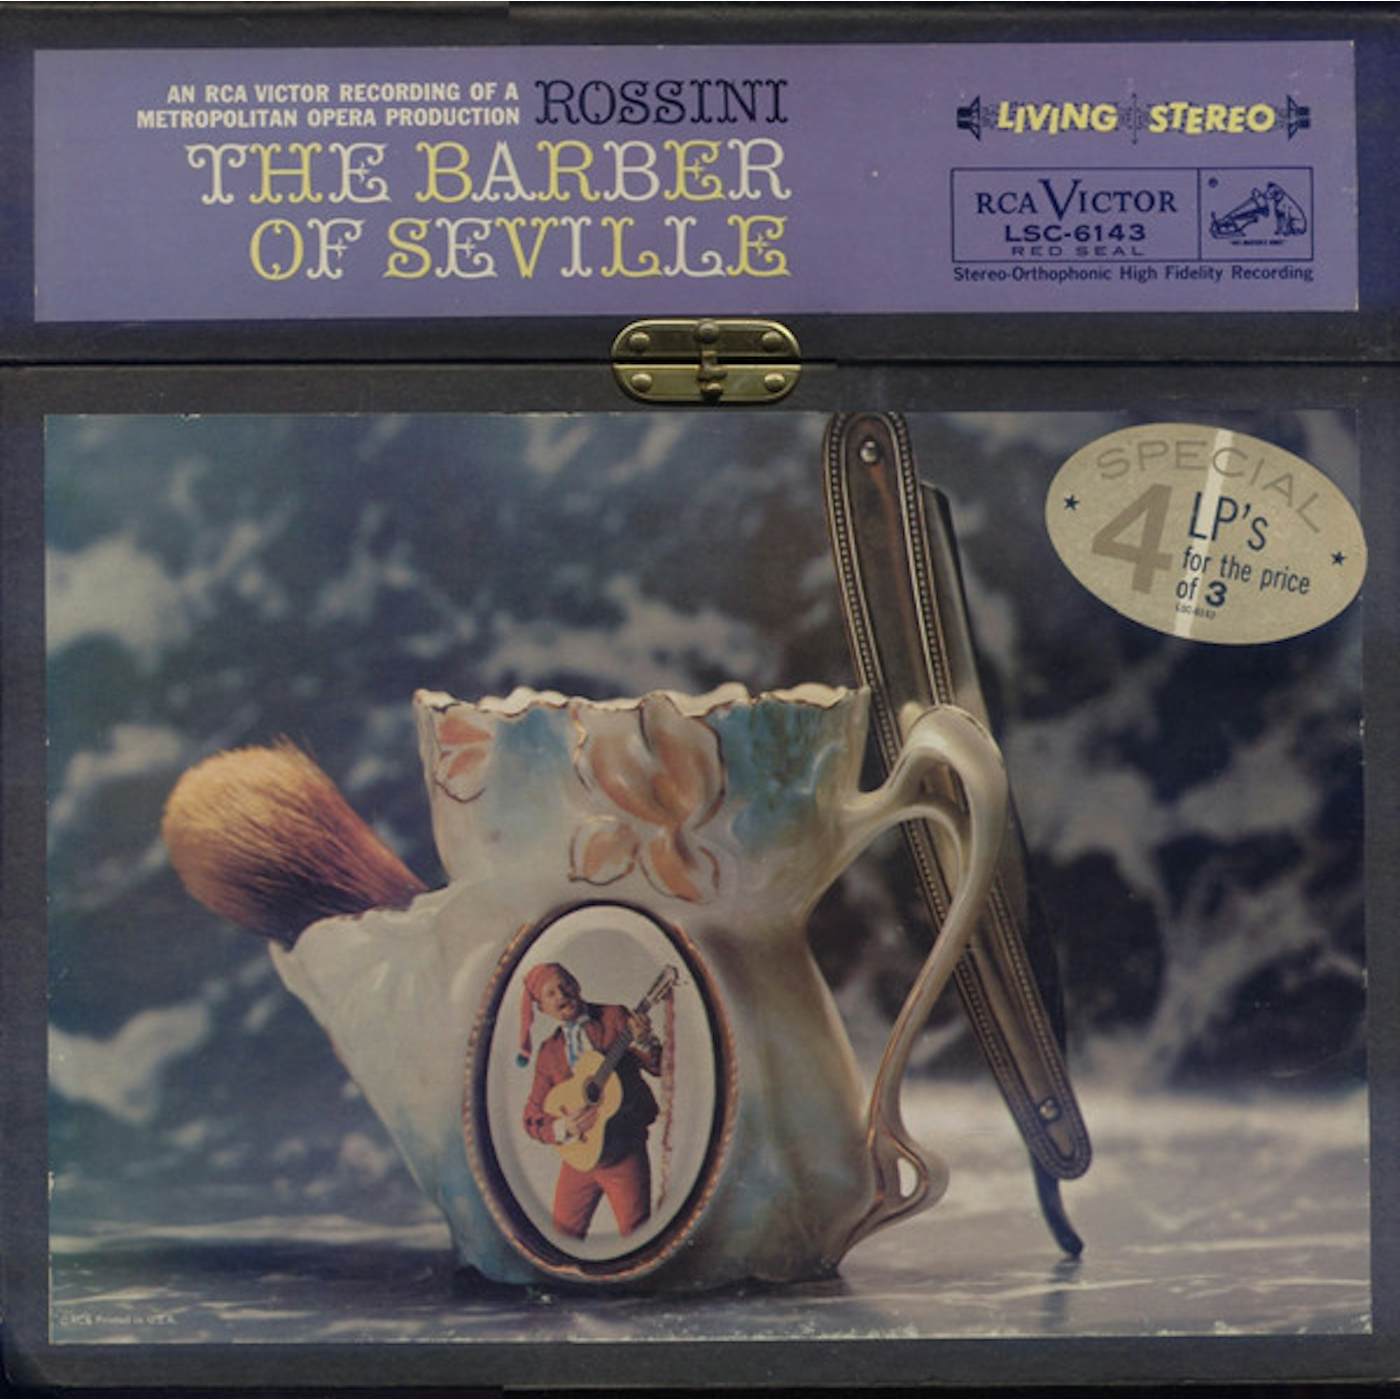 Rossini BARBER OF SEVILLE Vinyl Record